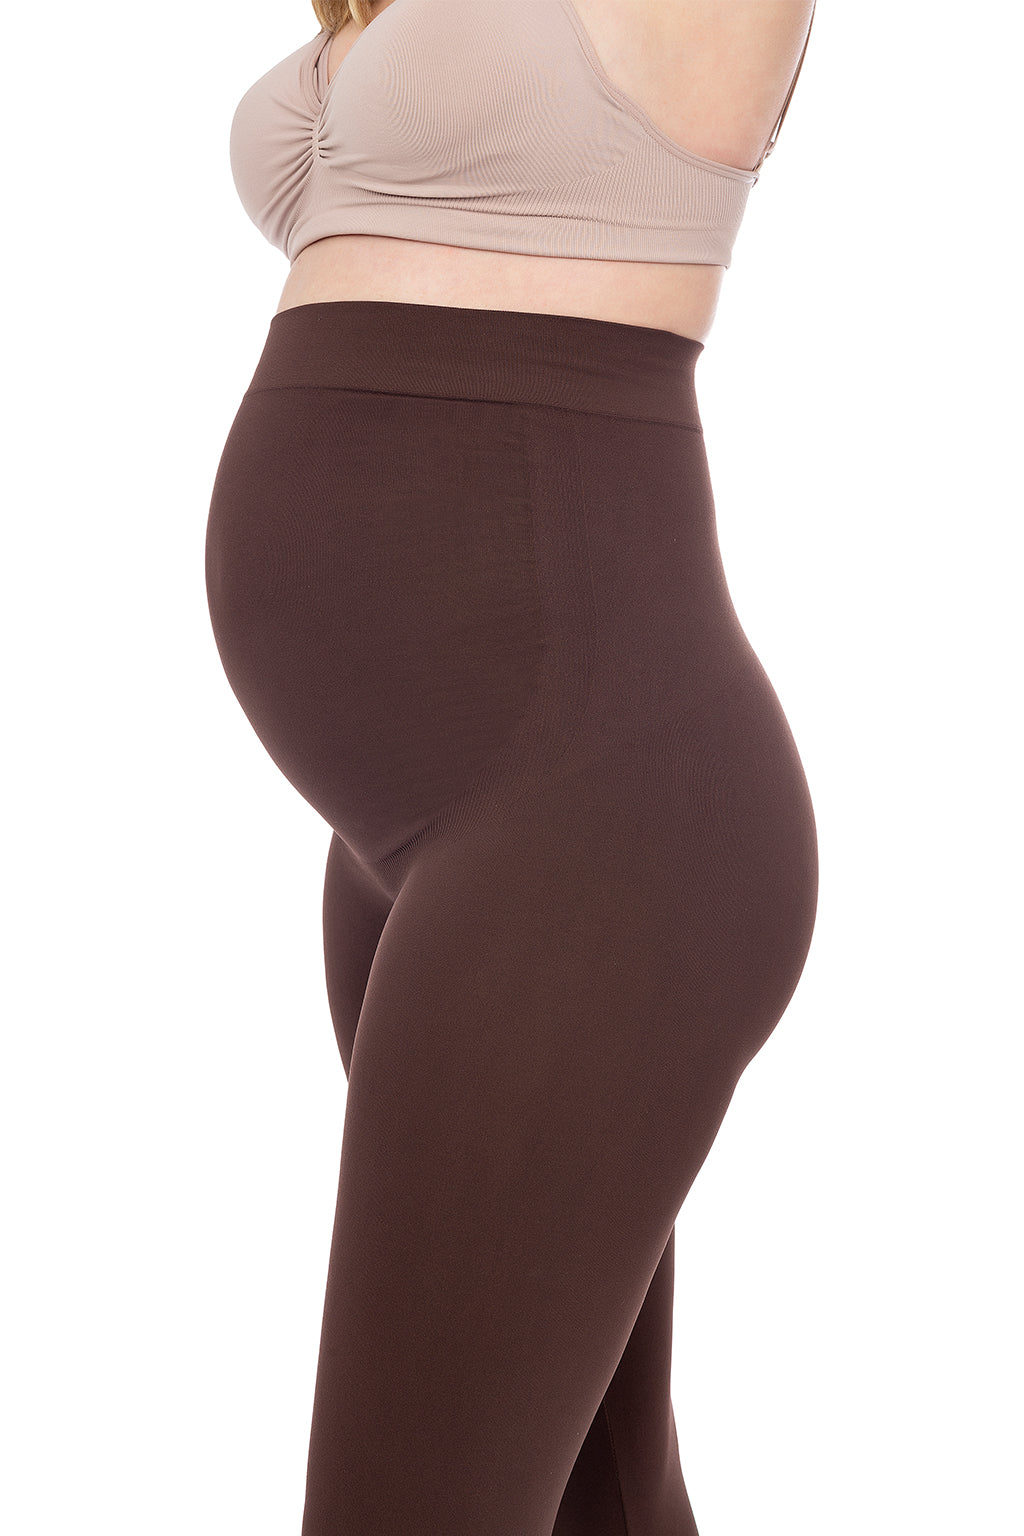 Pgeraug pants for women High-Waisted Bellies For Pregnant Comfortable  Leggings Pants Trousers leggings B XL